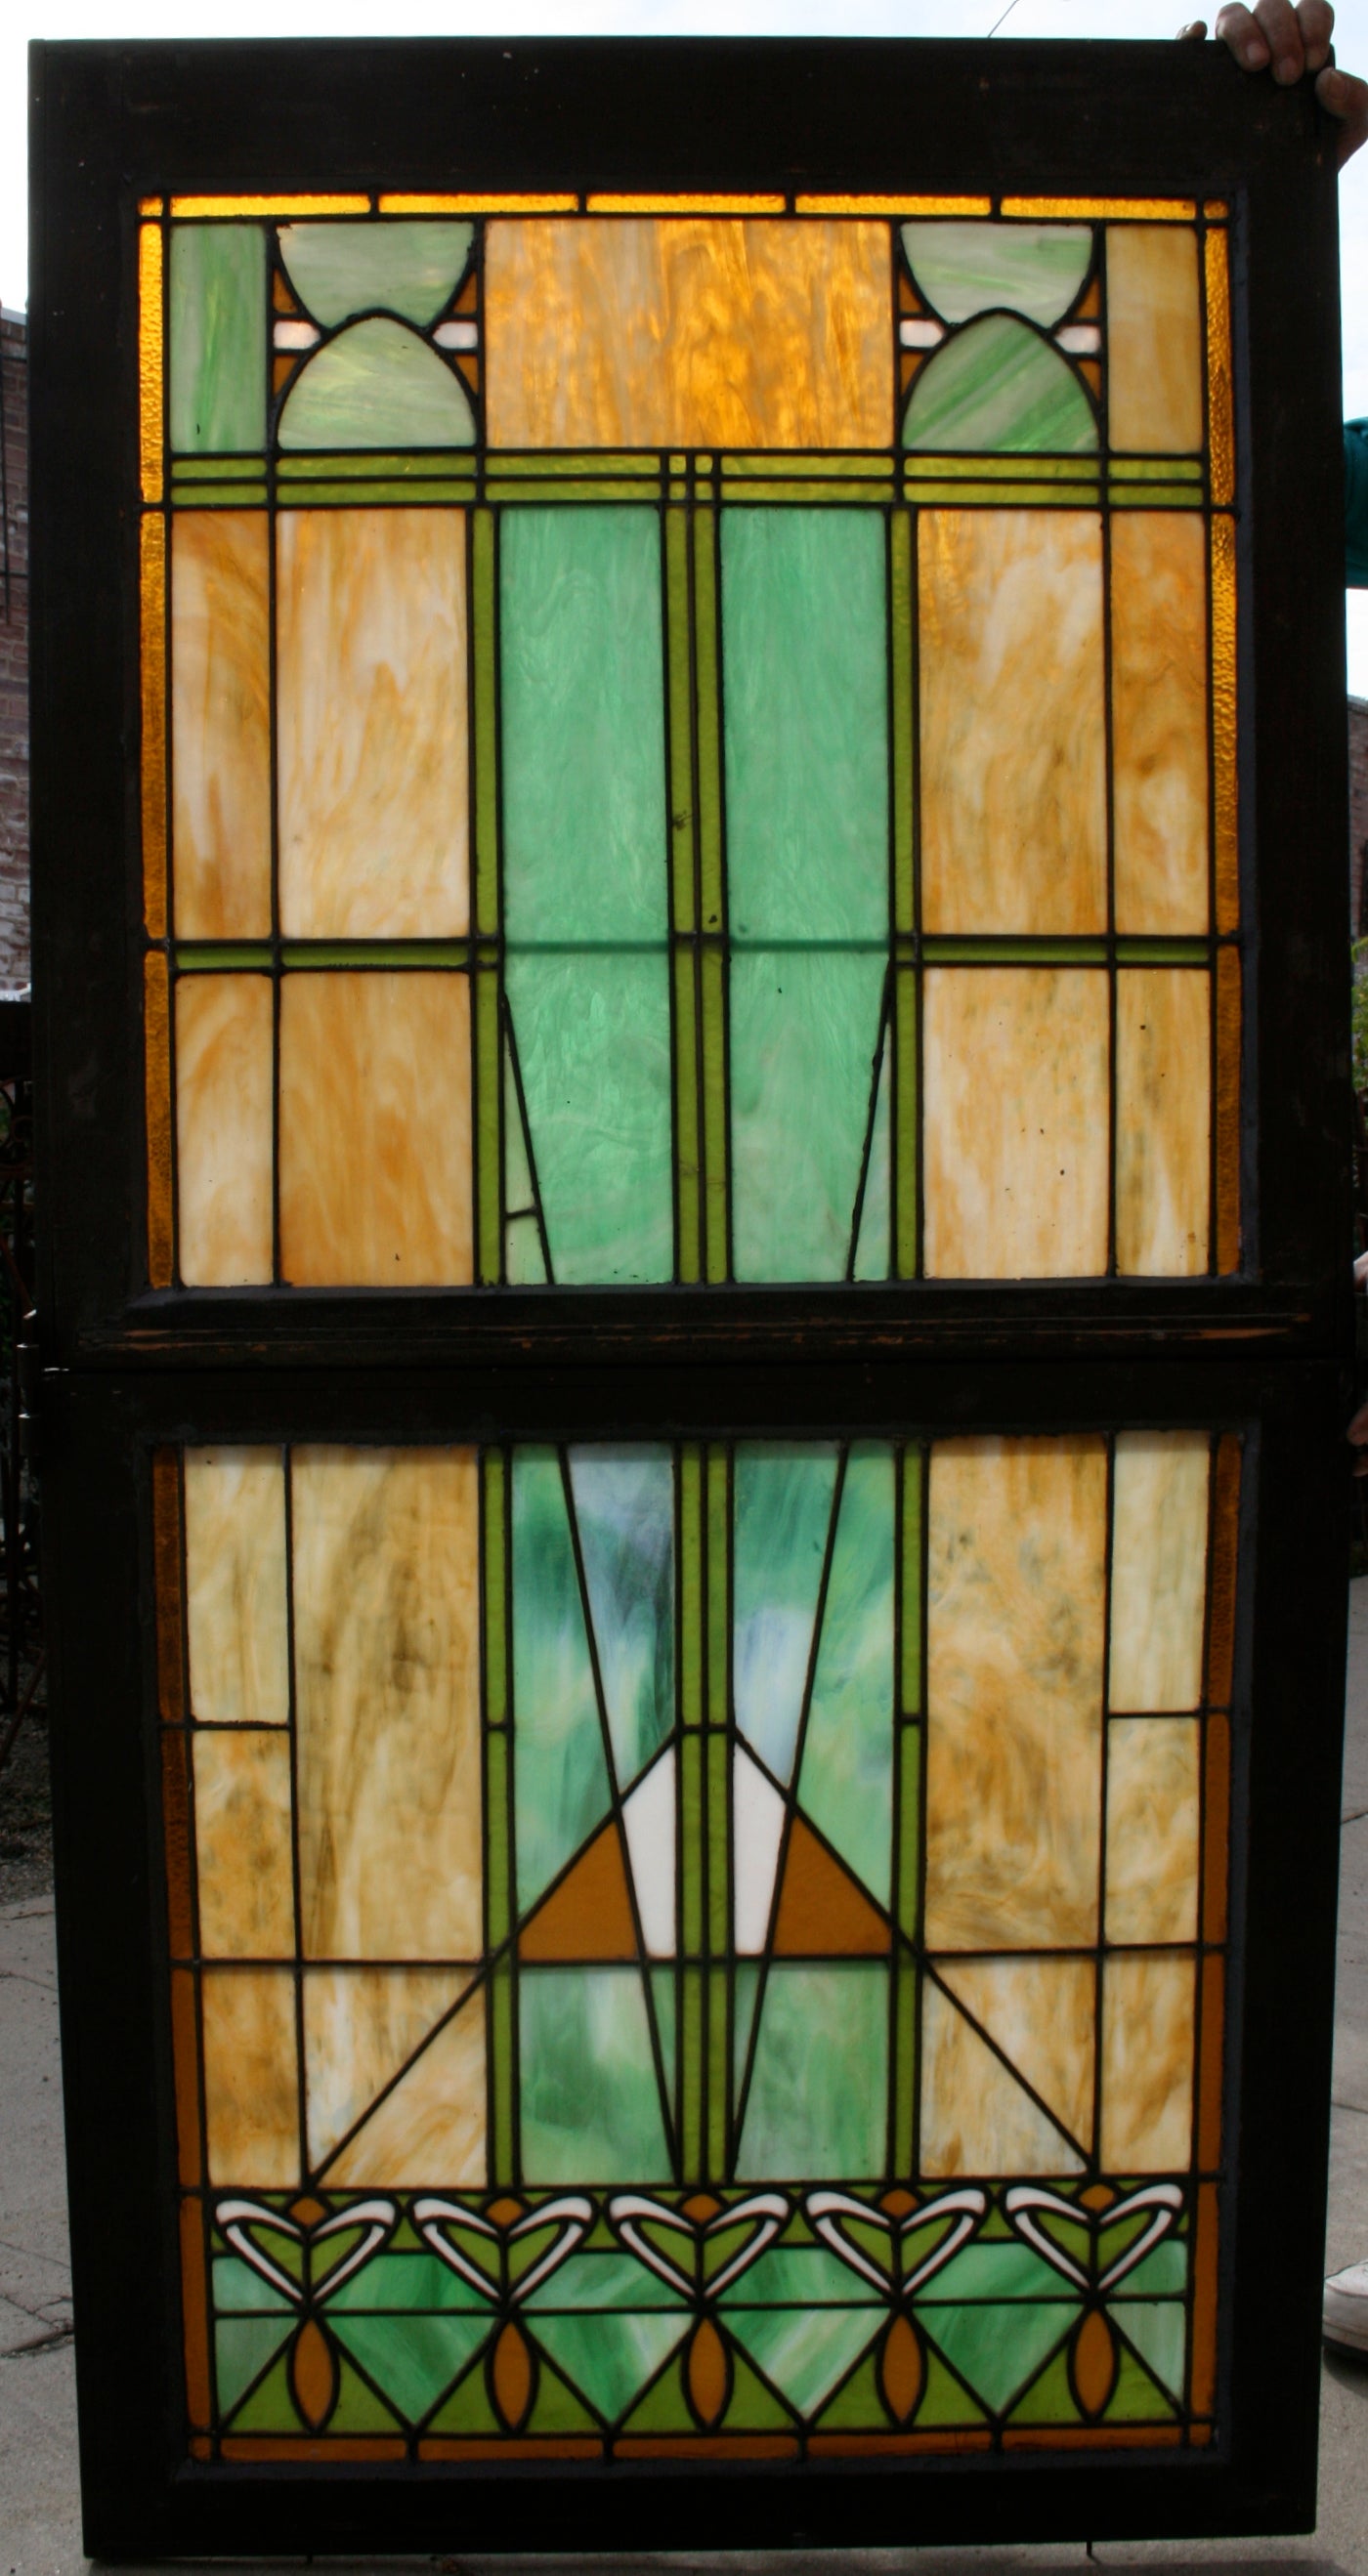  Large-scale Prairie School/Arts and Crafts Era Leaded Art Glass Windows